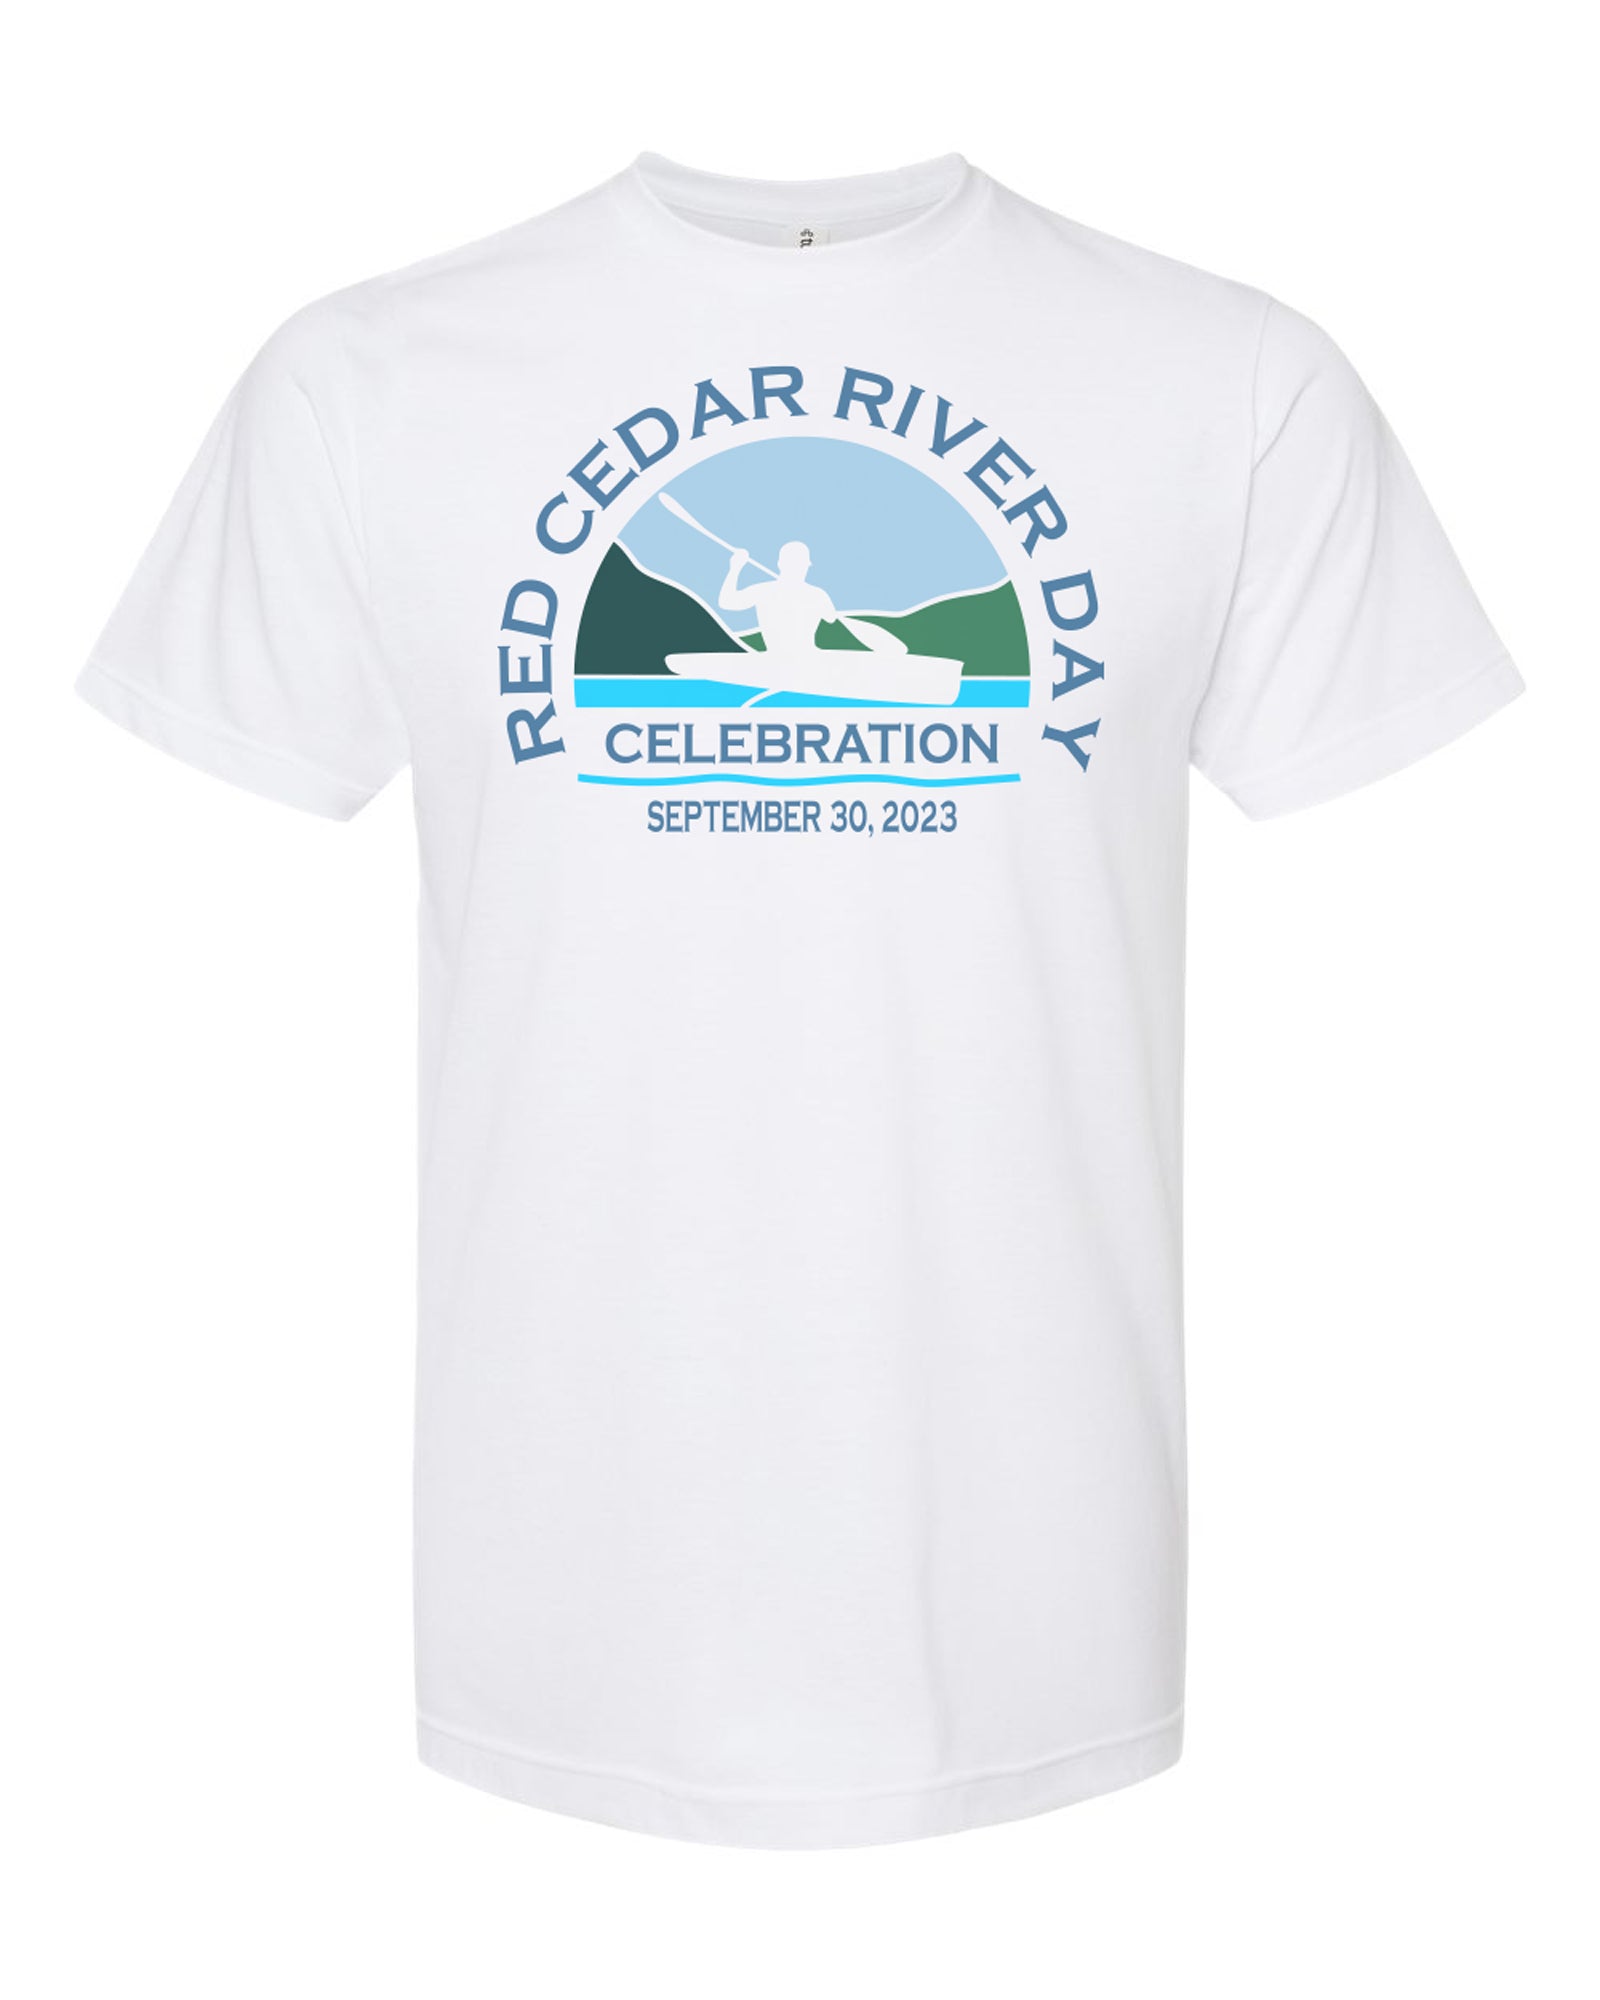 Red Cedar River Day Celebration 2023 Tee